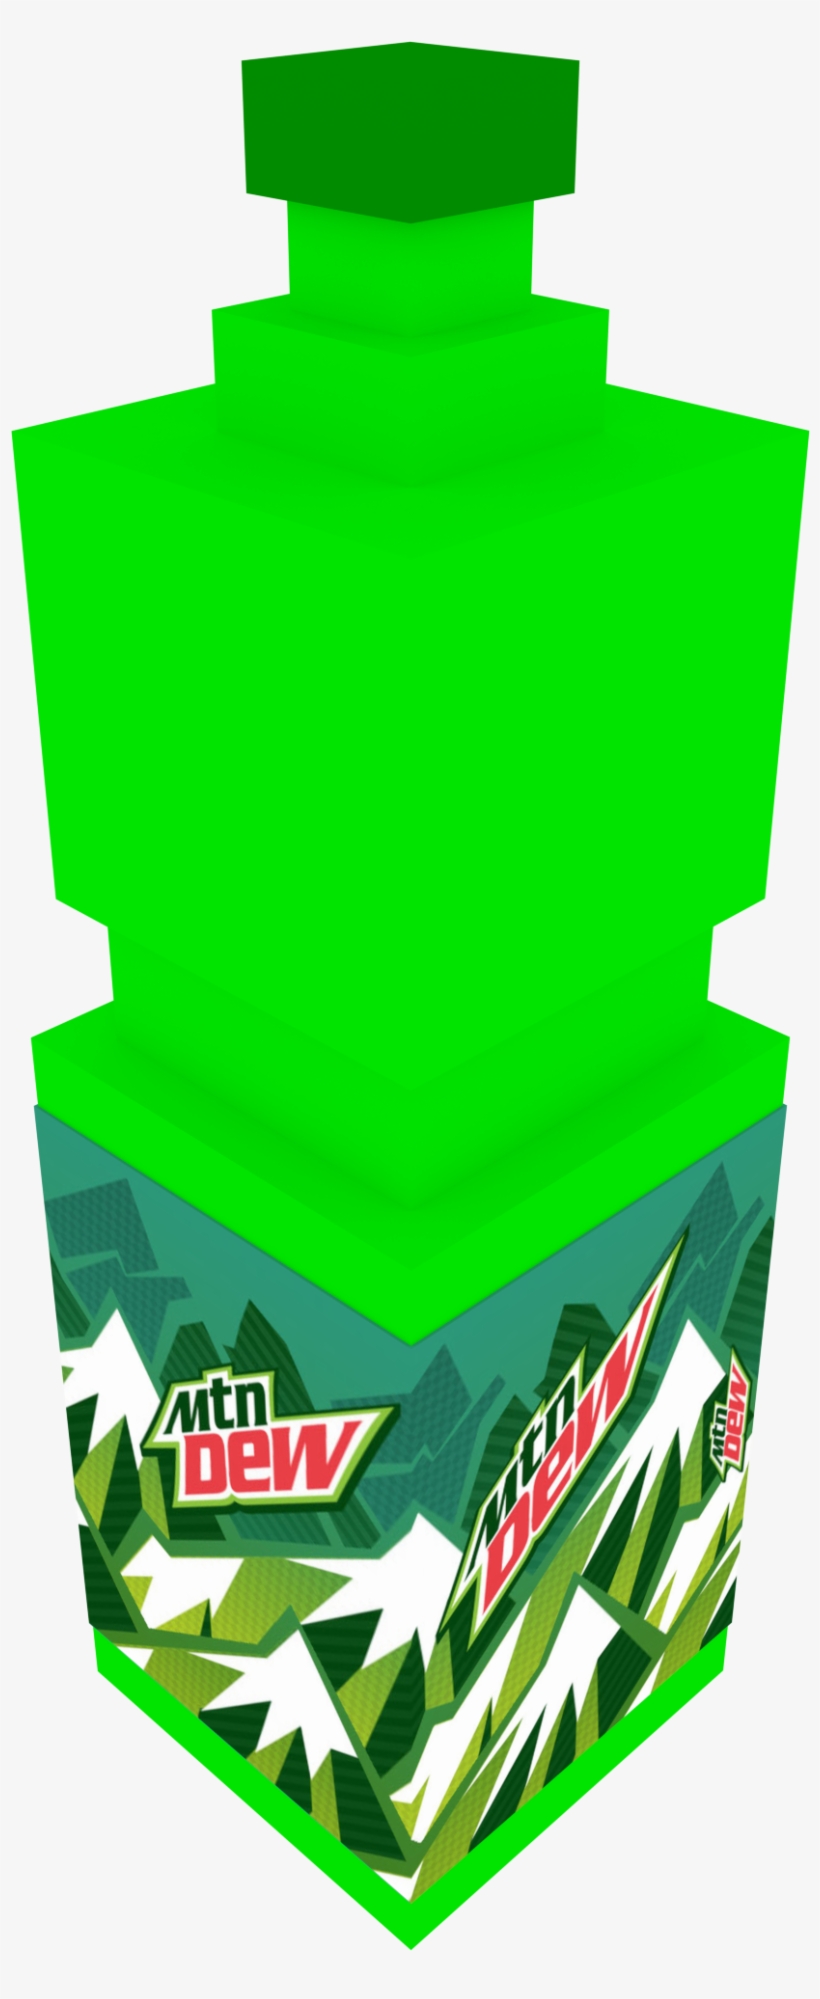 Mountain Dew Bottle Transparent Background Download - Portable Network Graphics, transparent png #609445